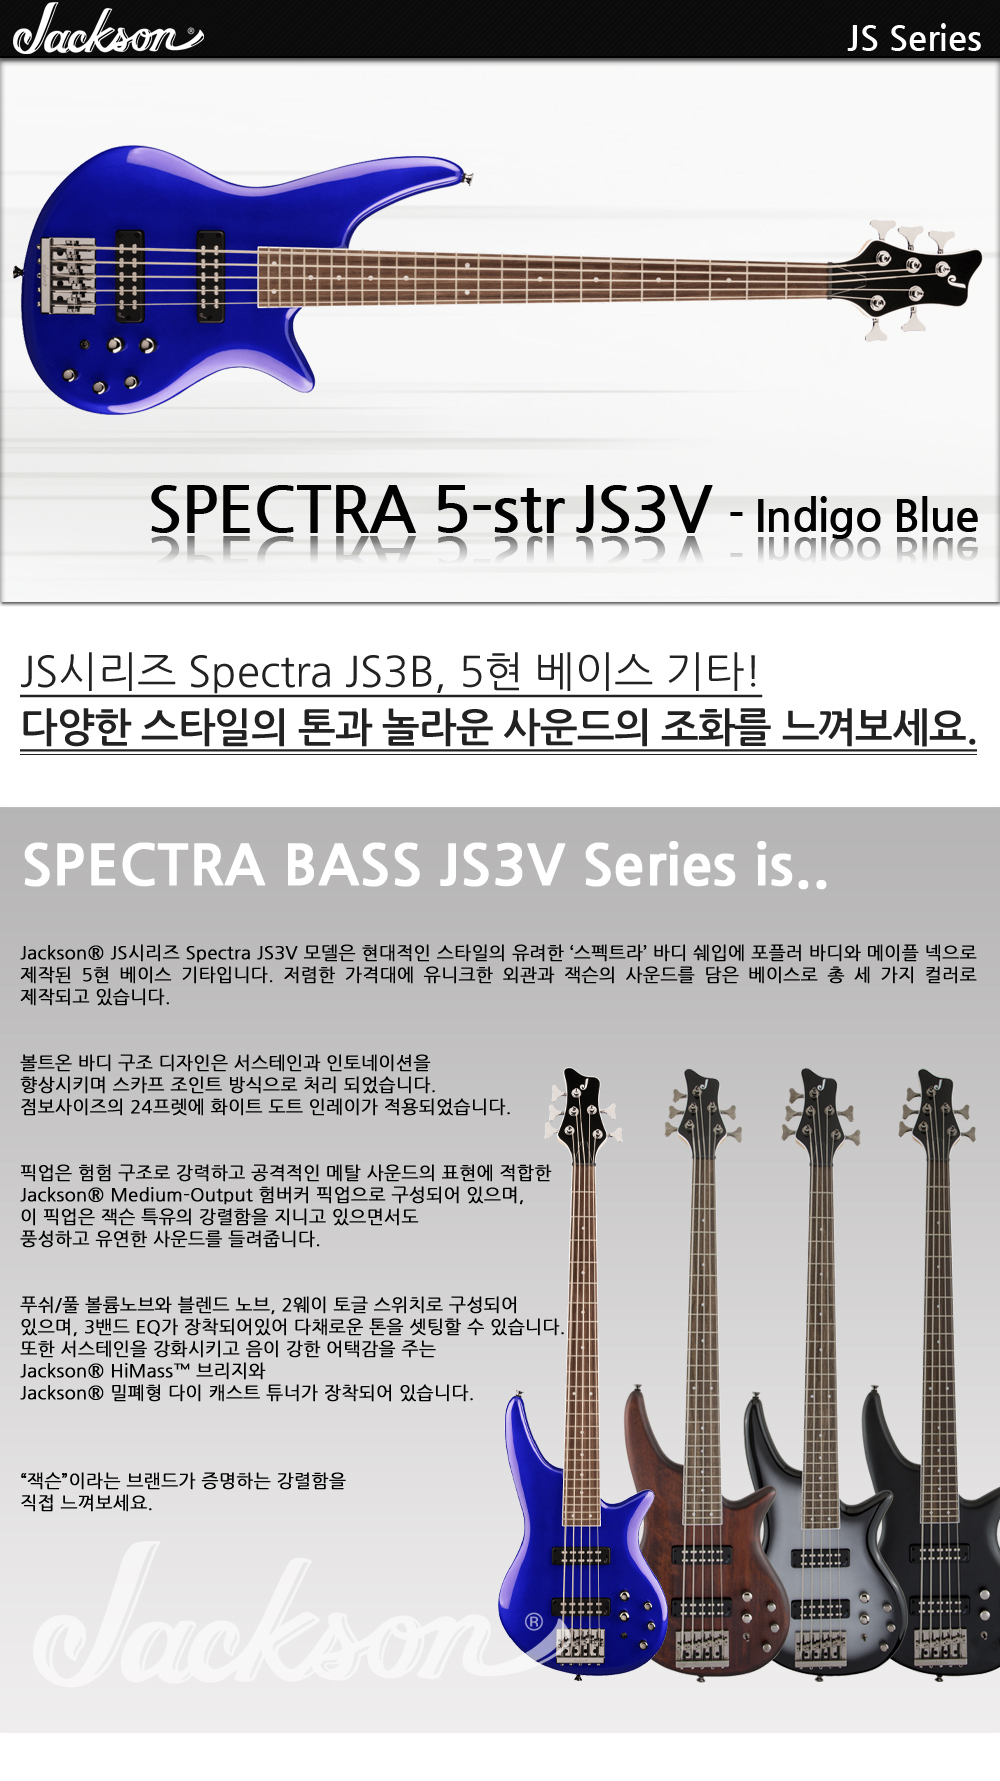 Jackson-JS-Spectra-JS3V-5str-IndigoBlue_1_174708.jpg